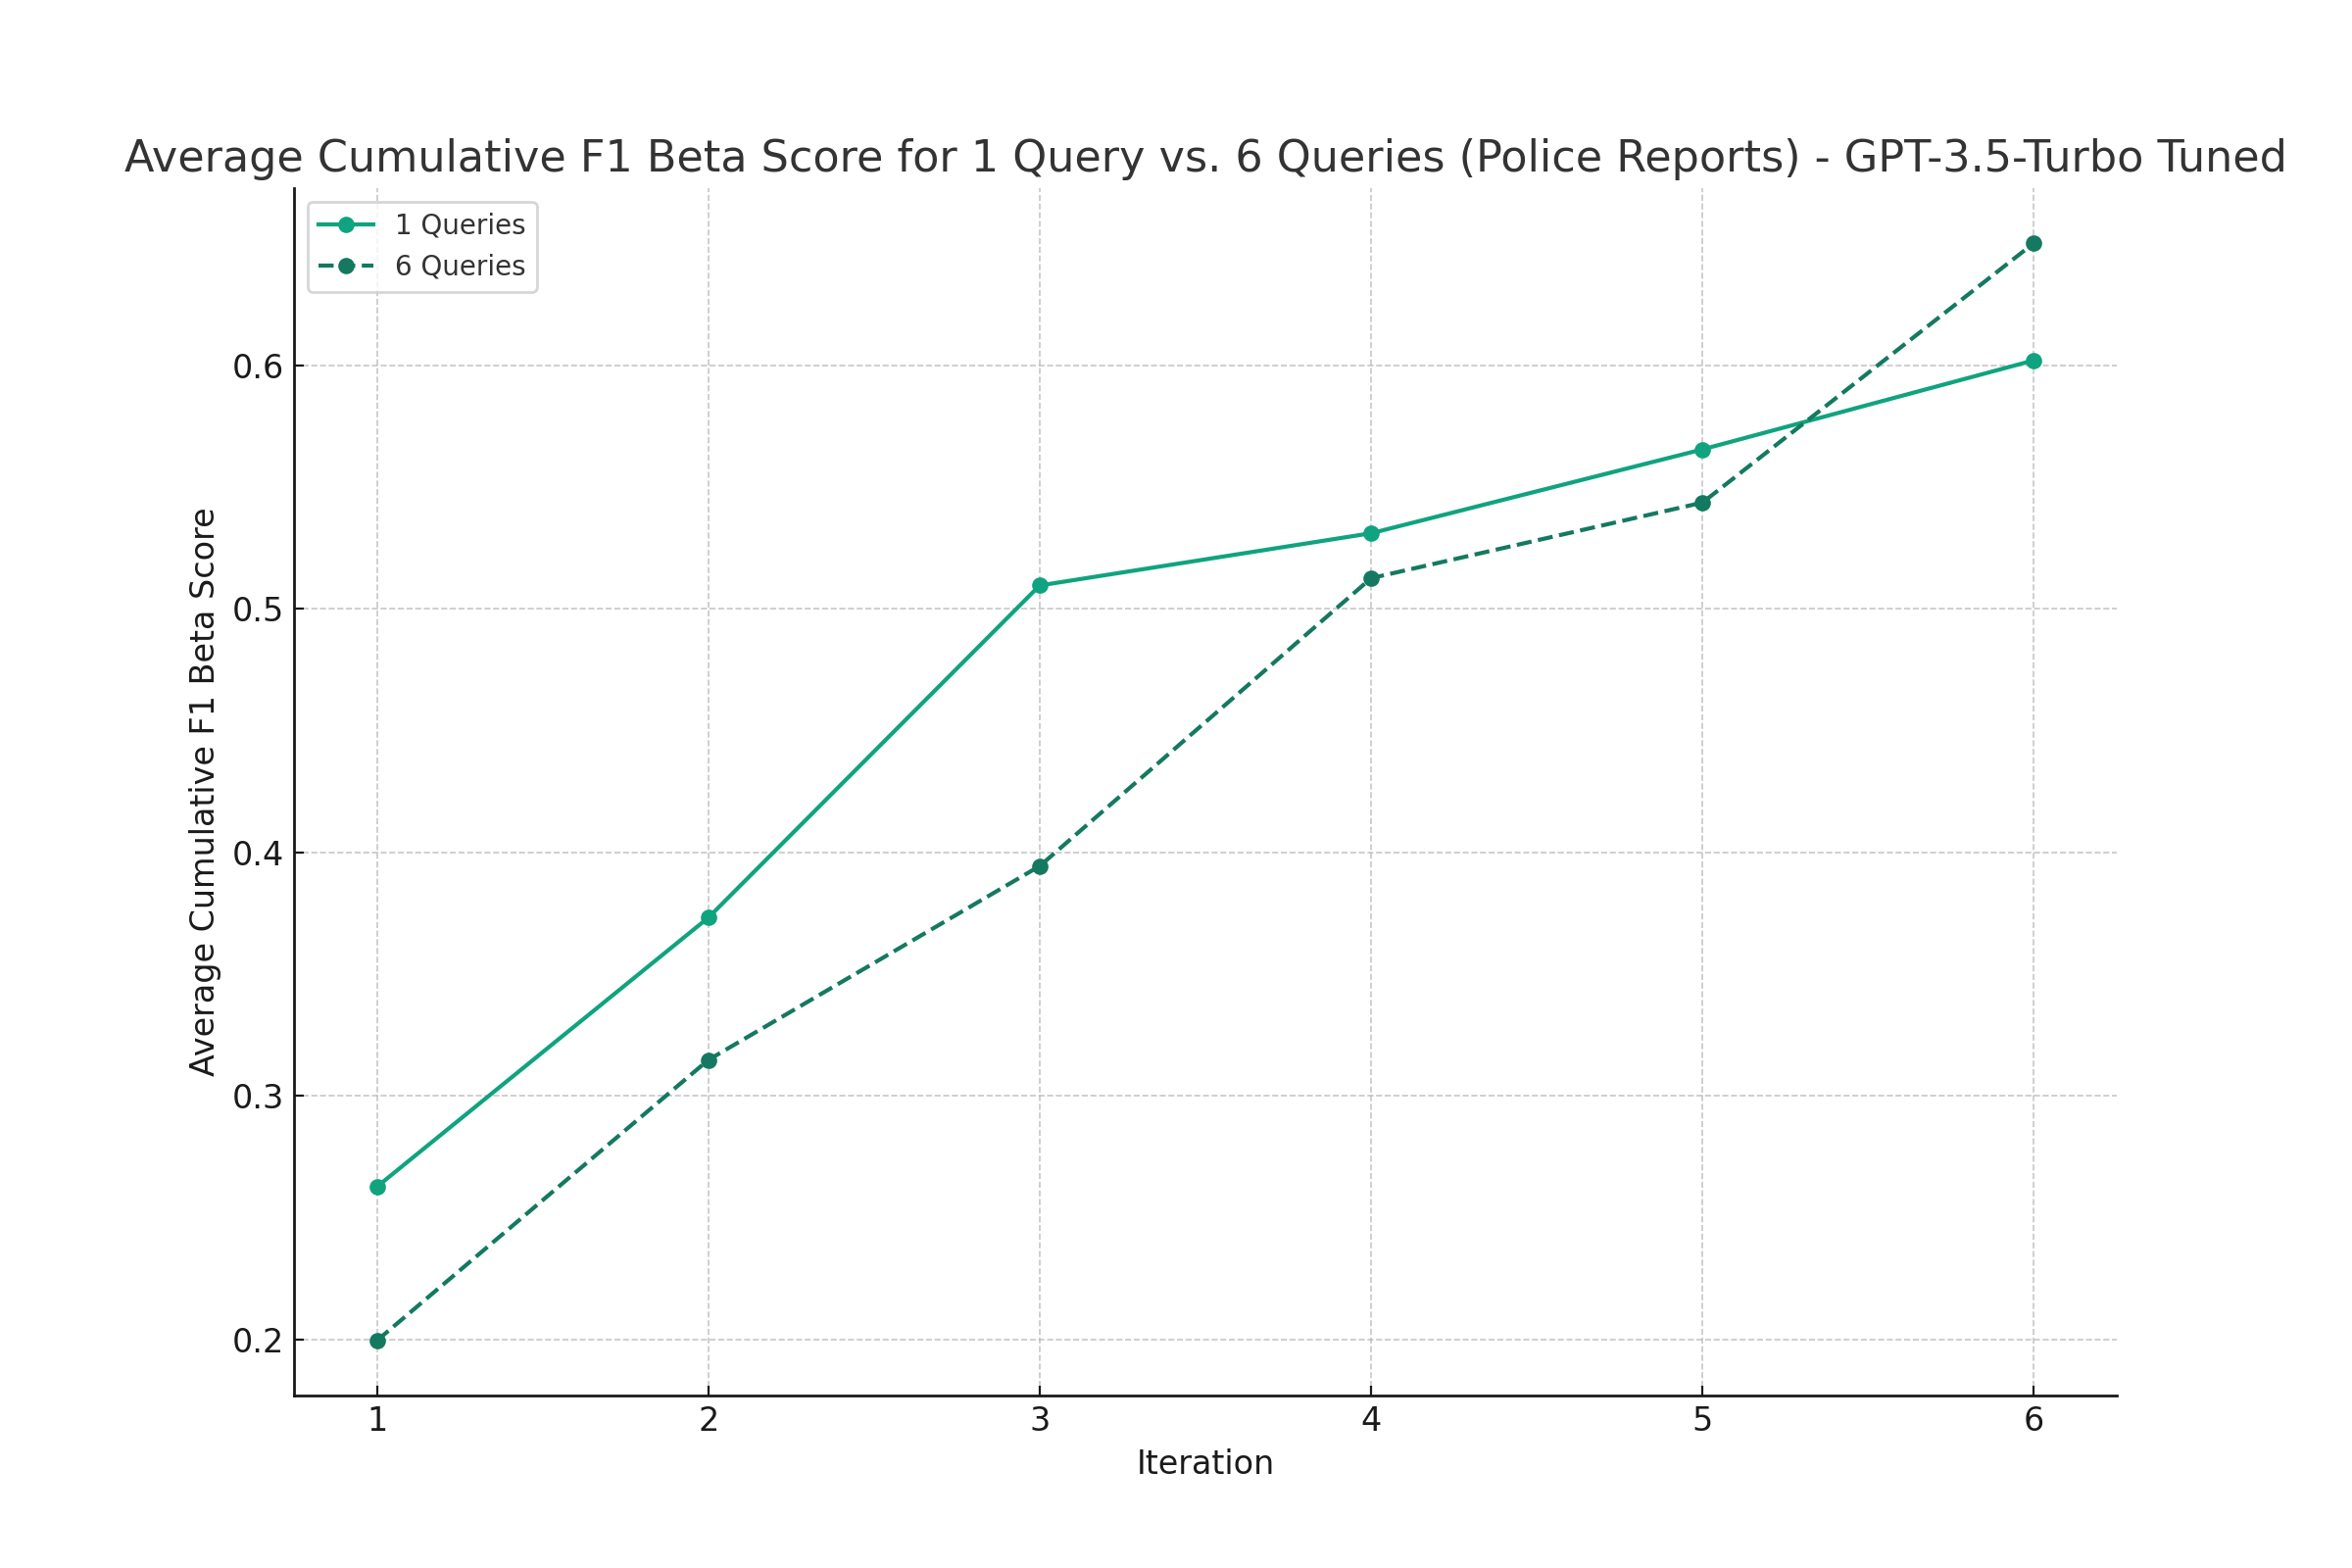 Figure 3: Average Cumulative F1 Beta Score for 1 Query vs. 6 Queries (Police Reports) - Model: GPT-3